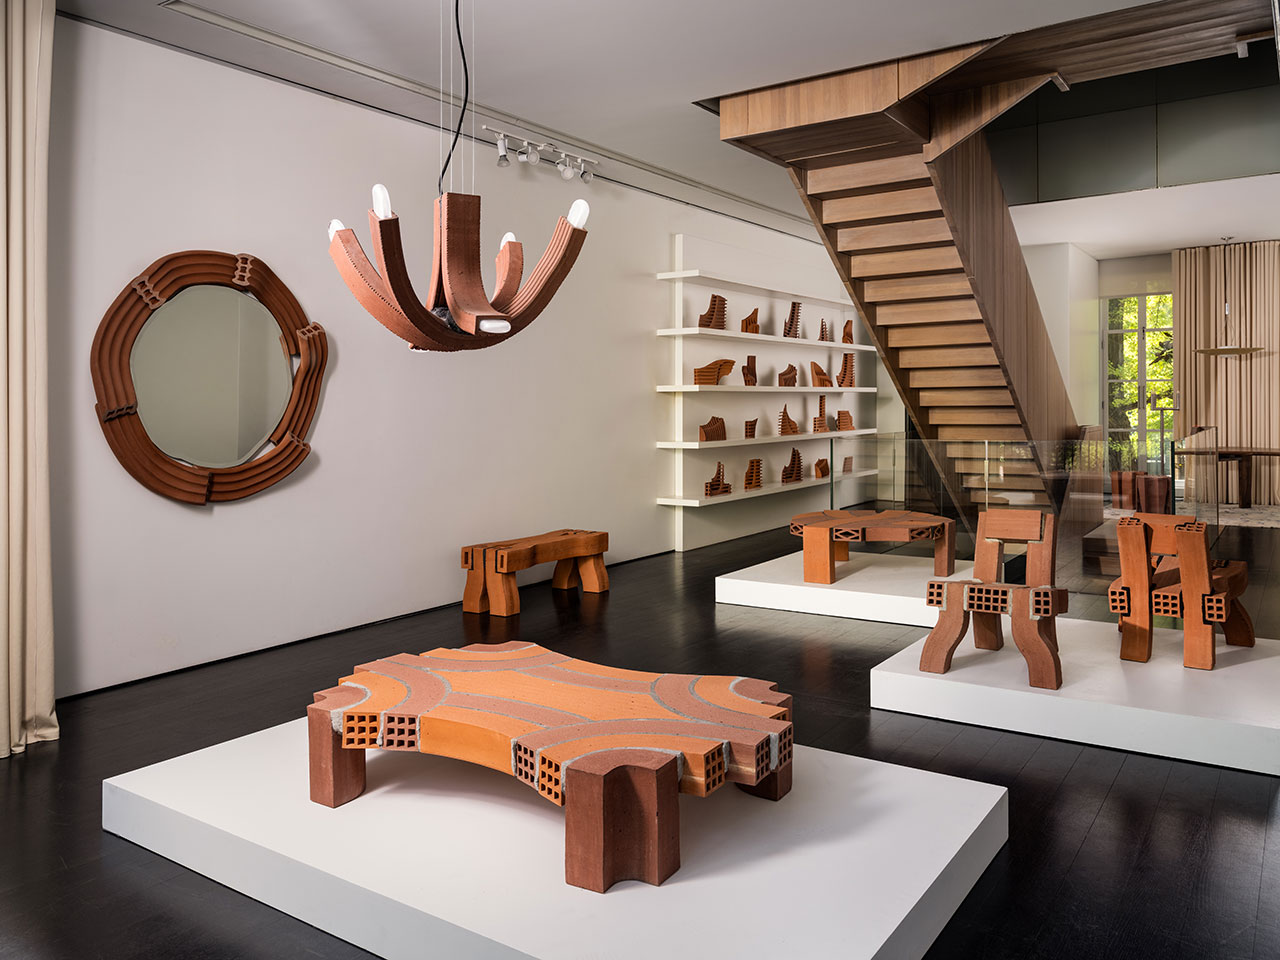 Floris Wubben Exhibits Brick’s Material Prowess in Solo Showcase